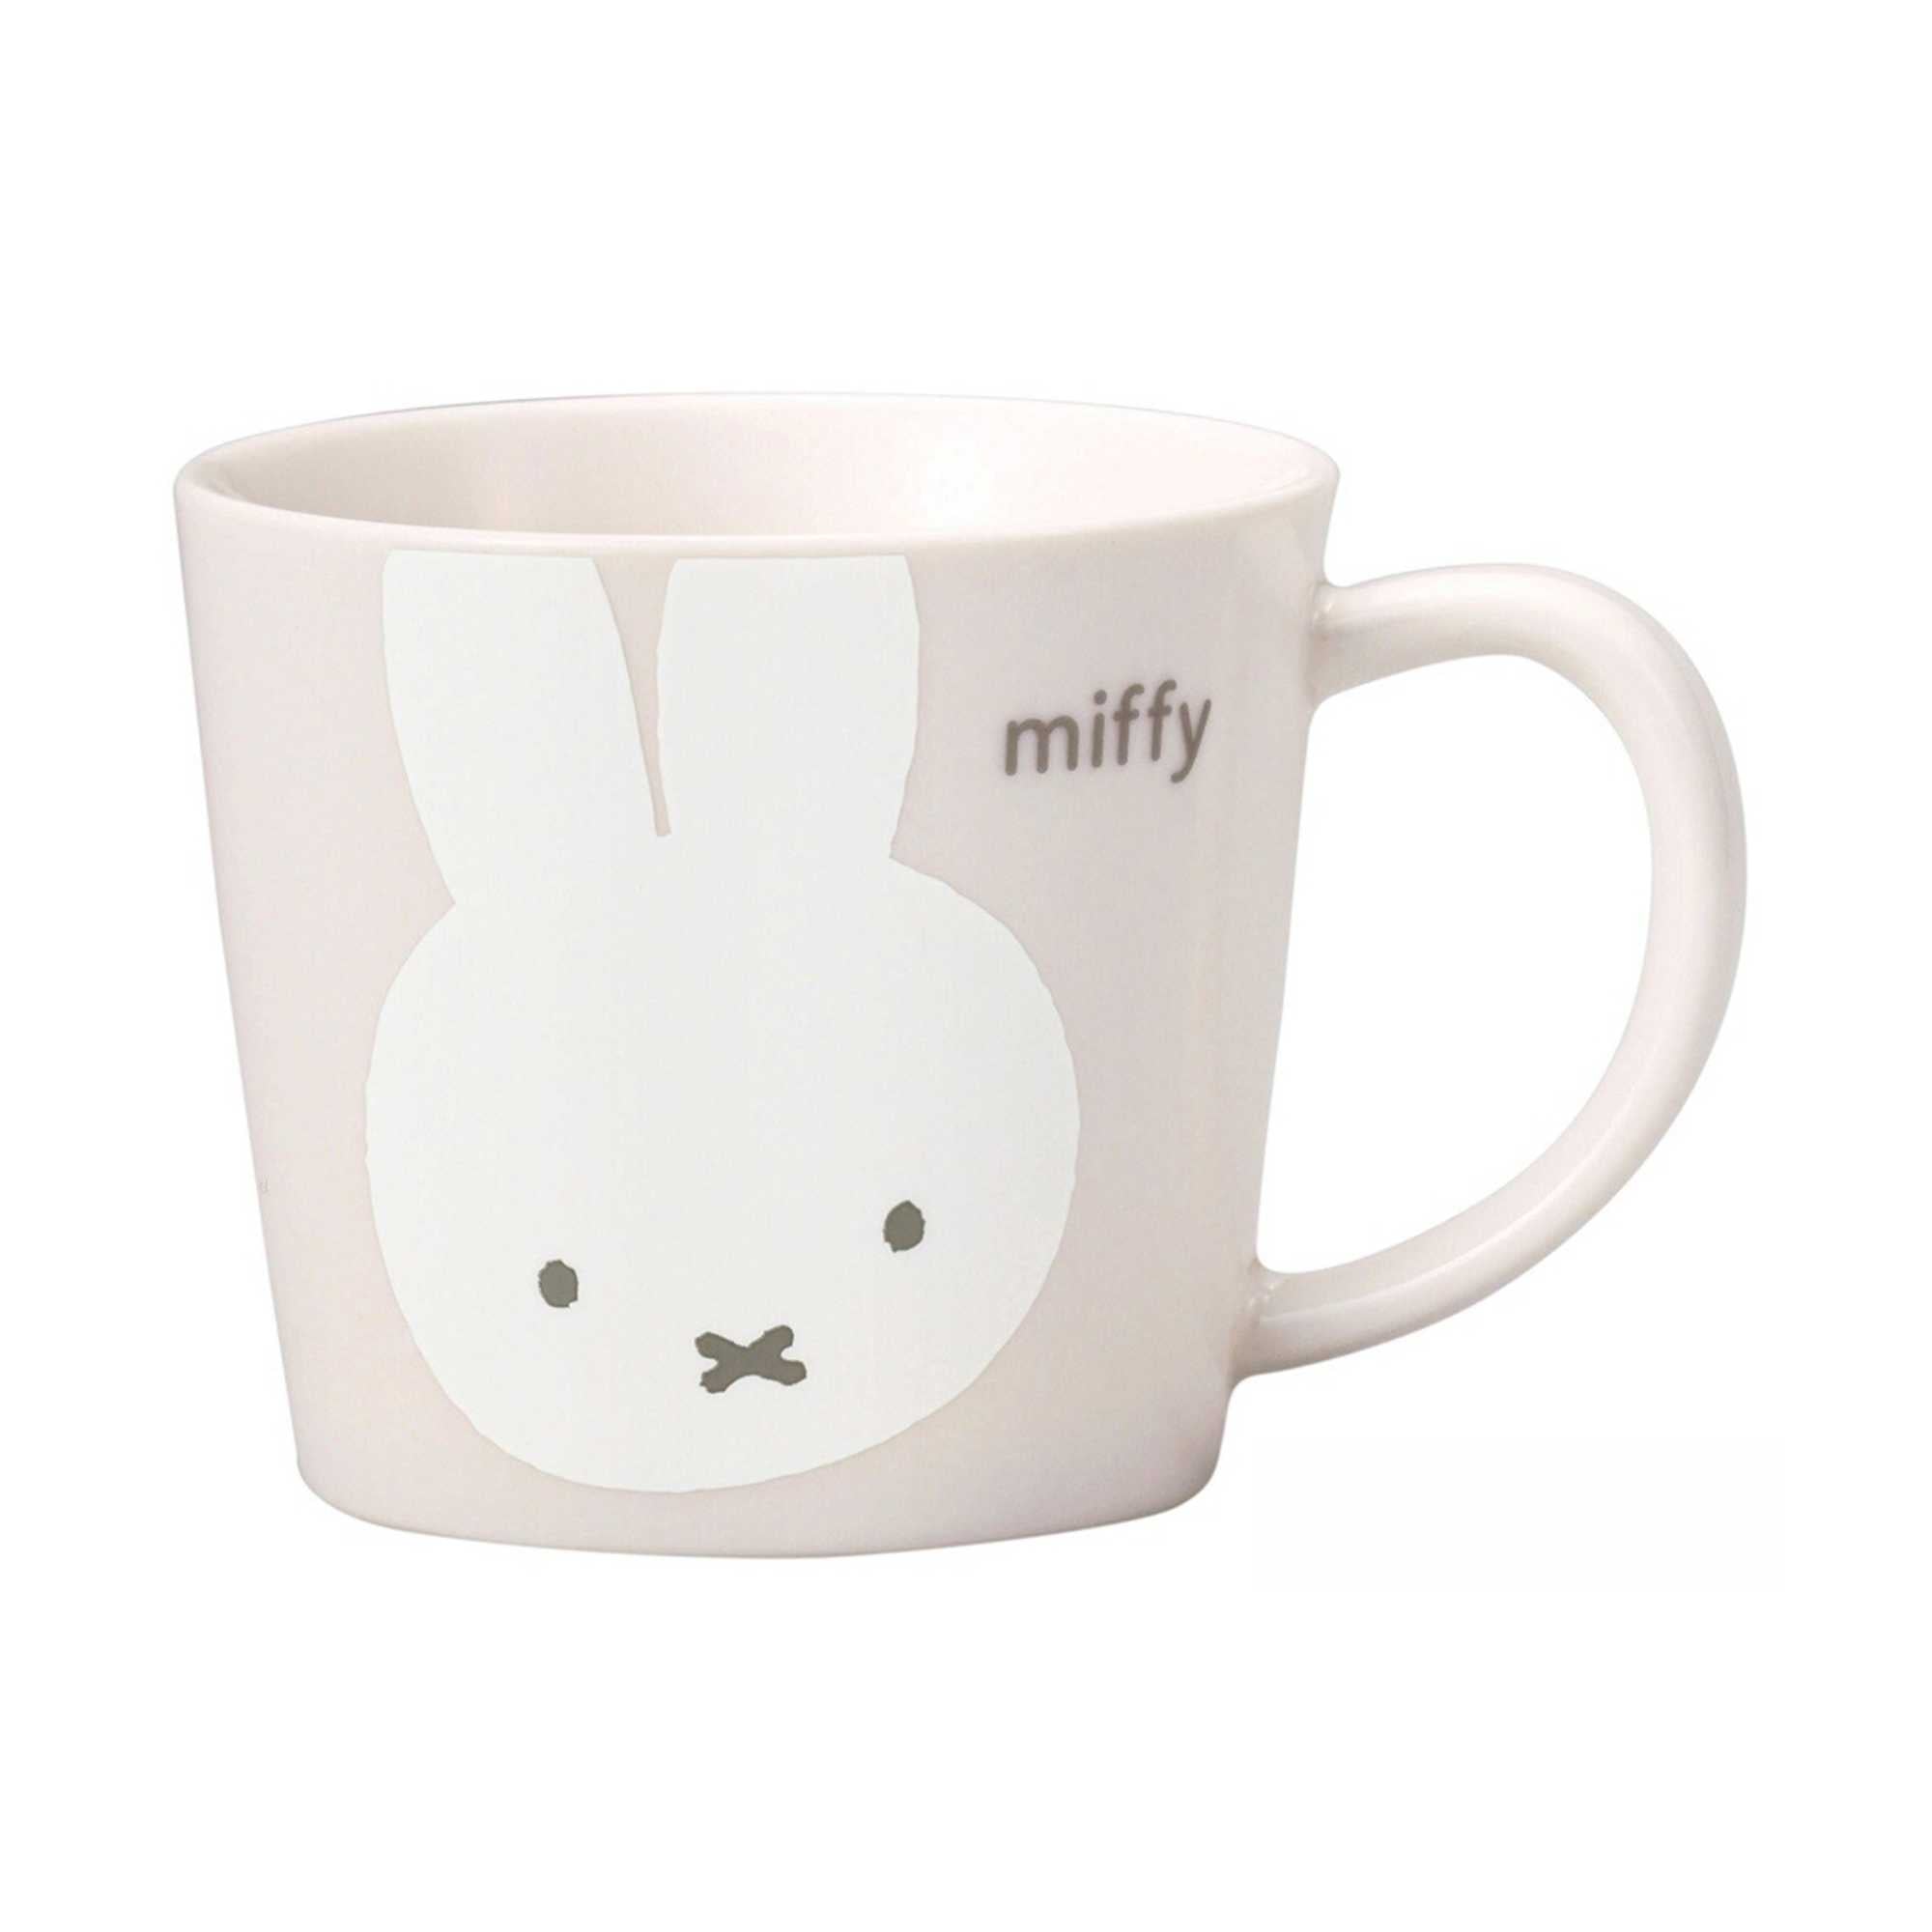 Miffy White Face Mug, standard